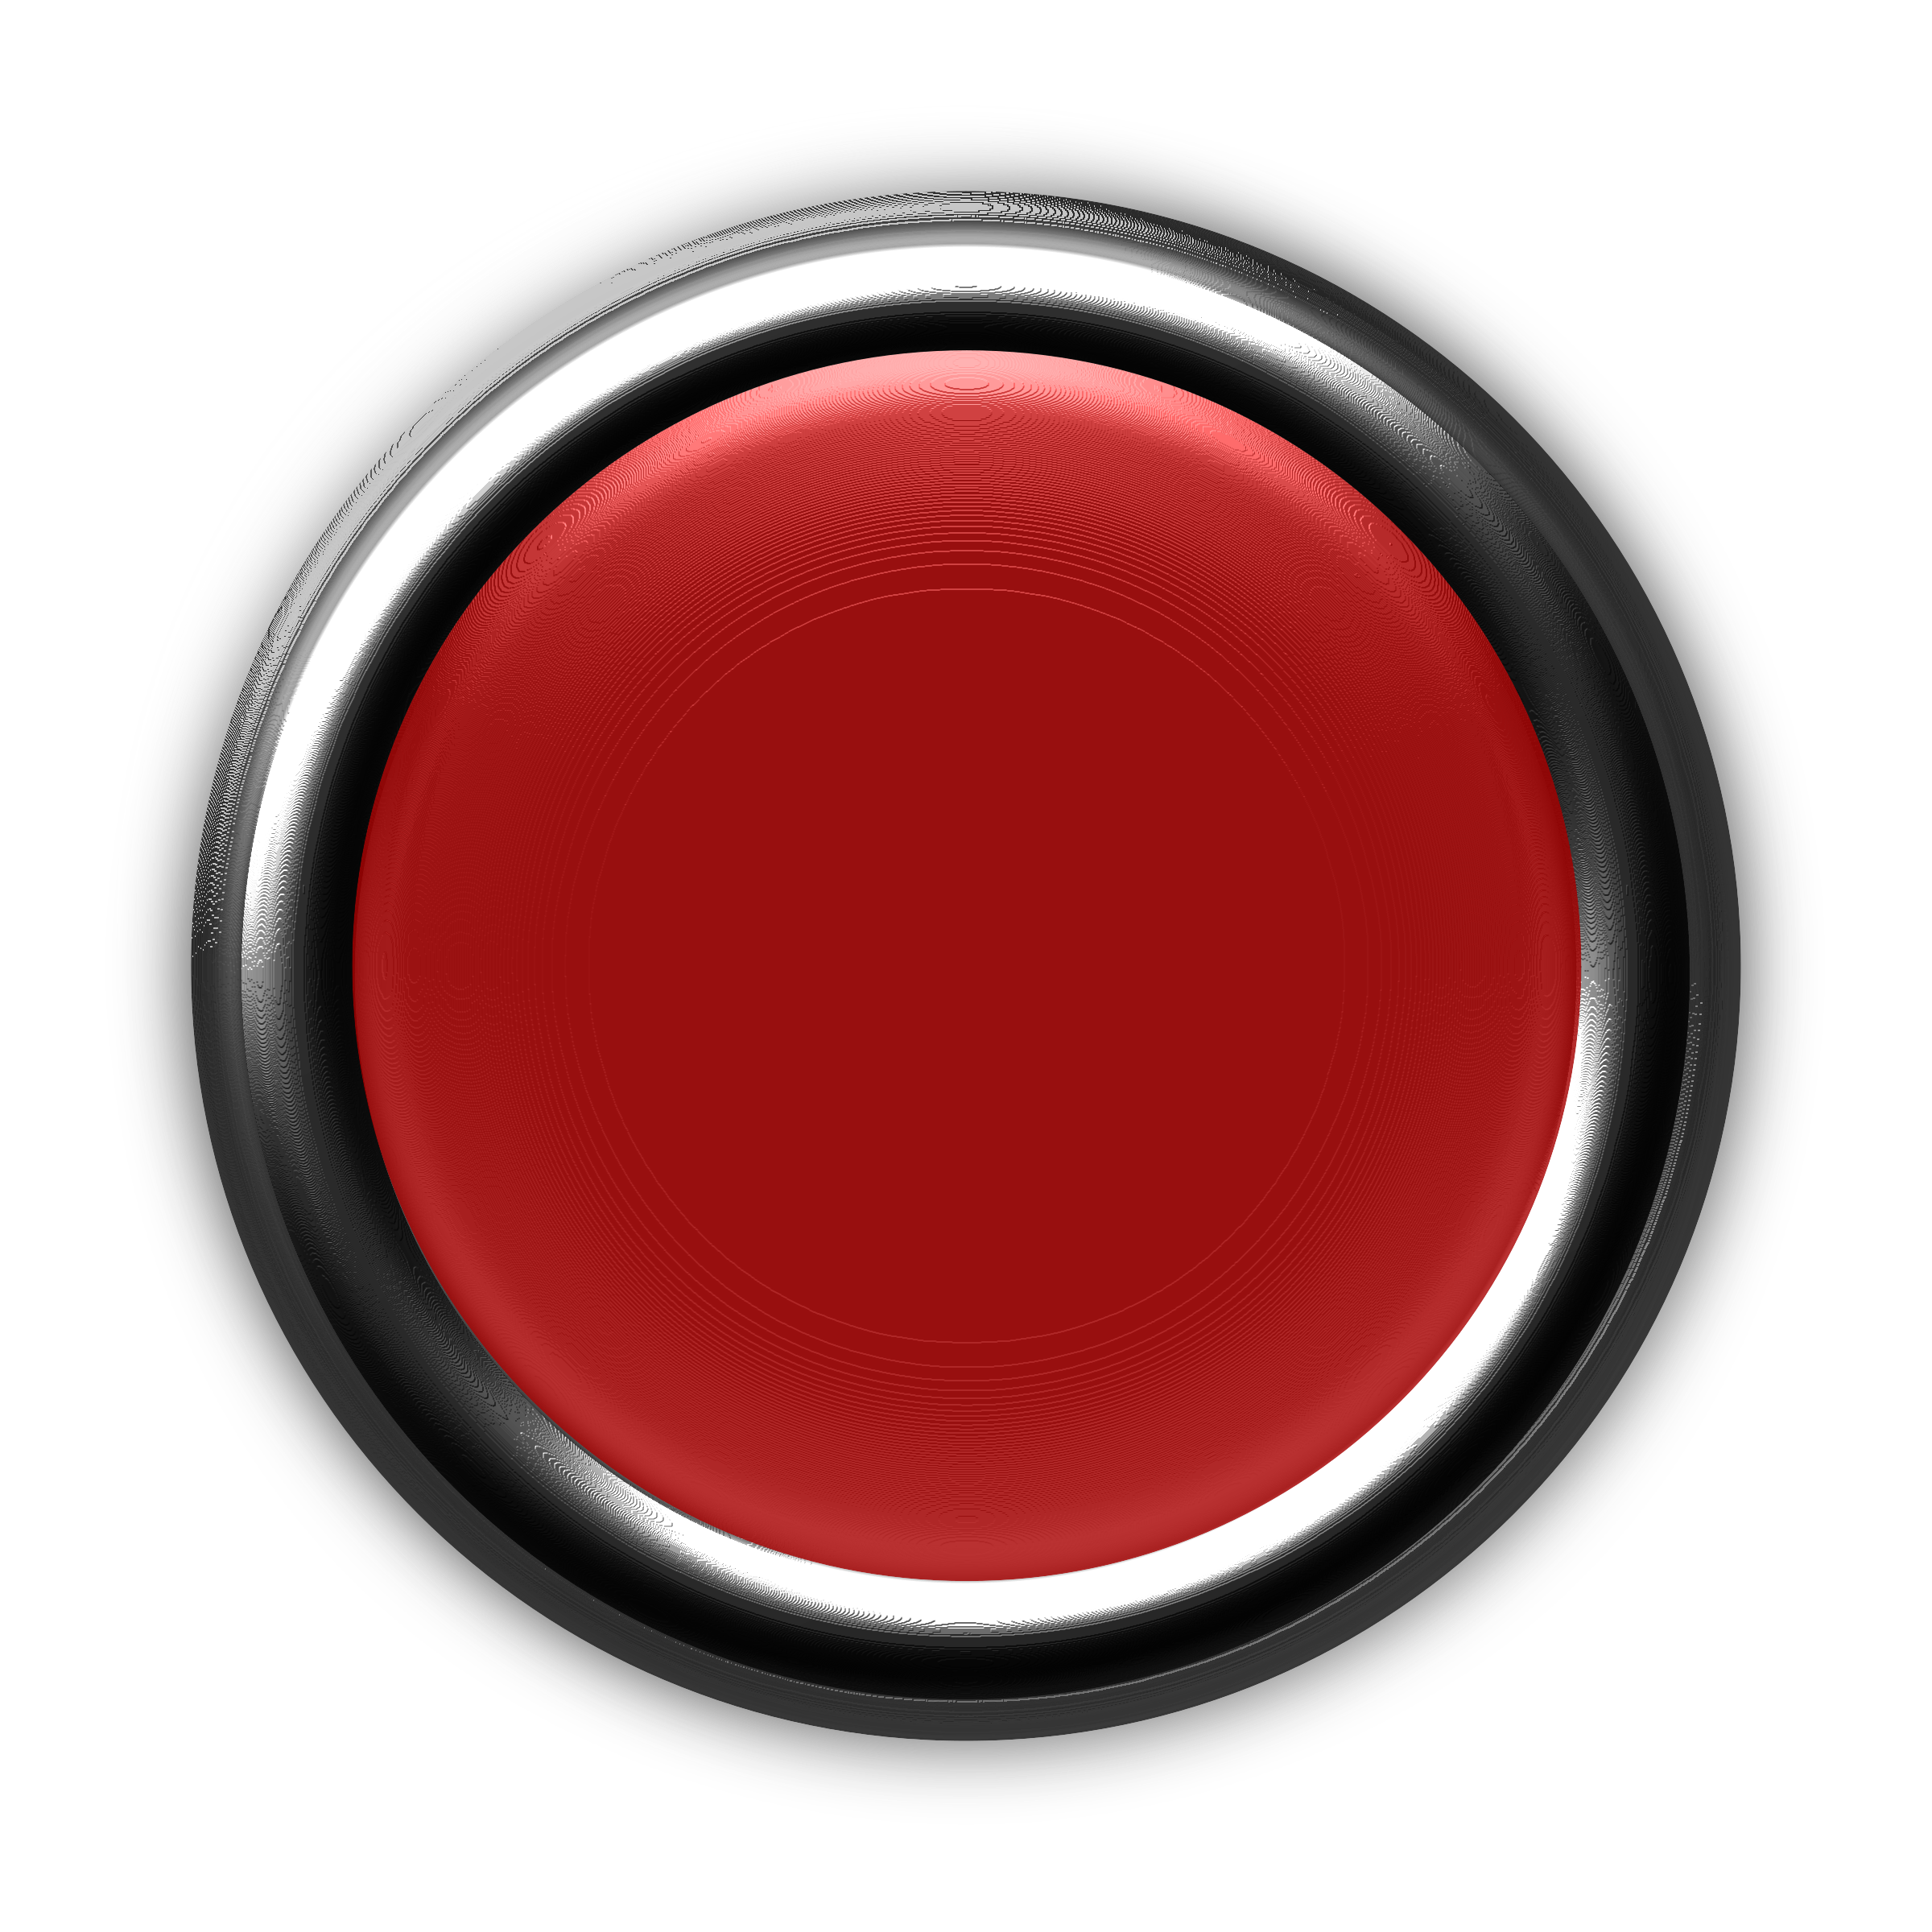 Red button clipart - ClipartFox